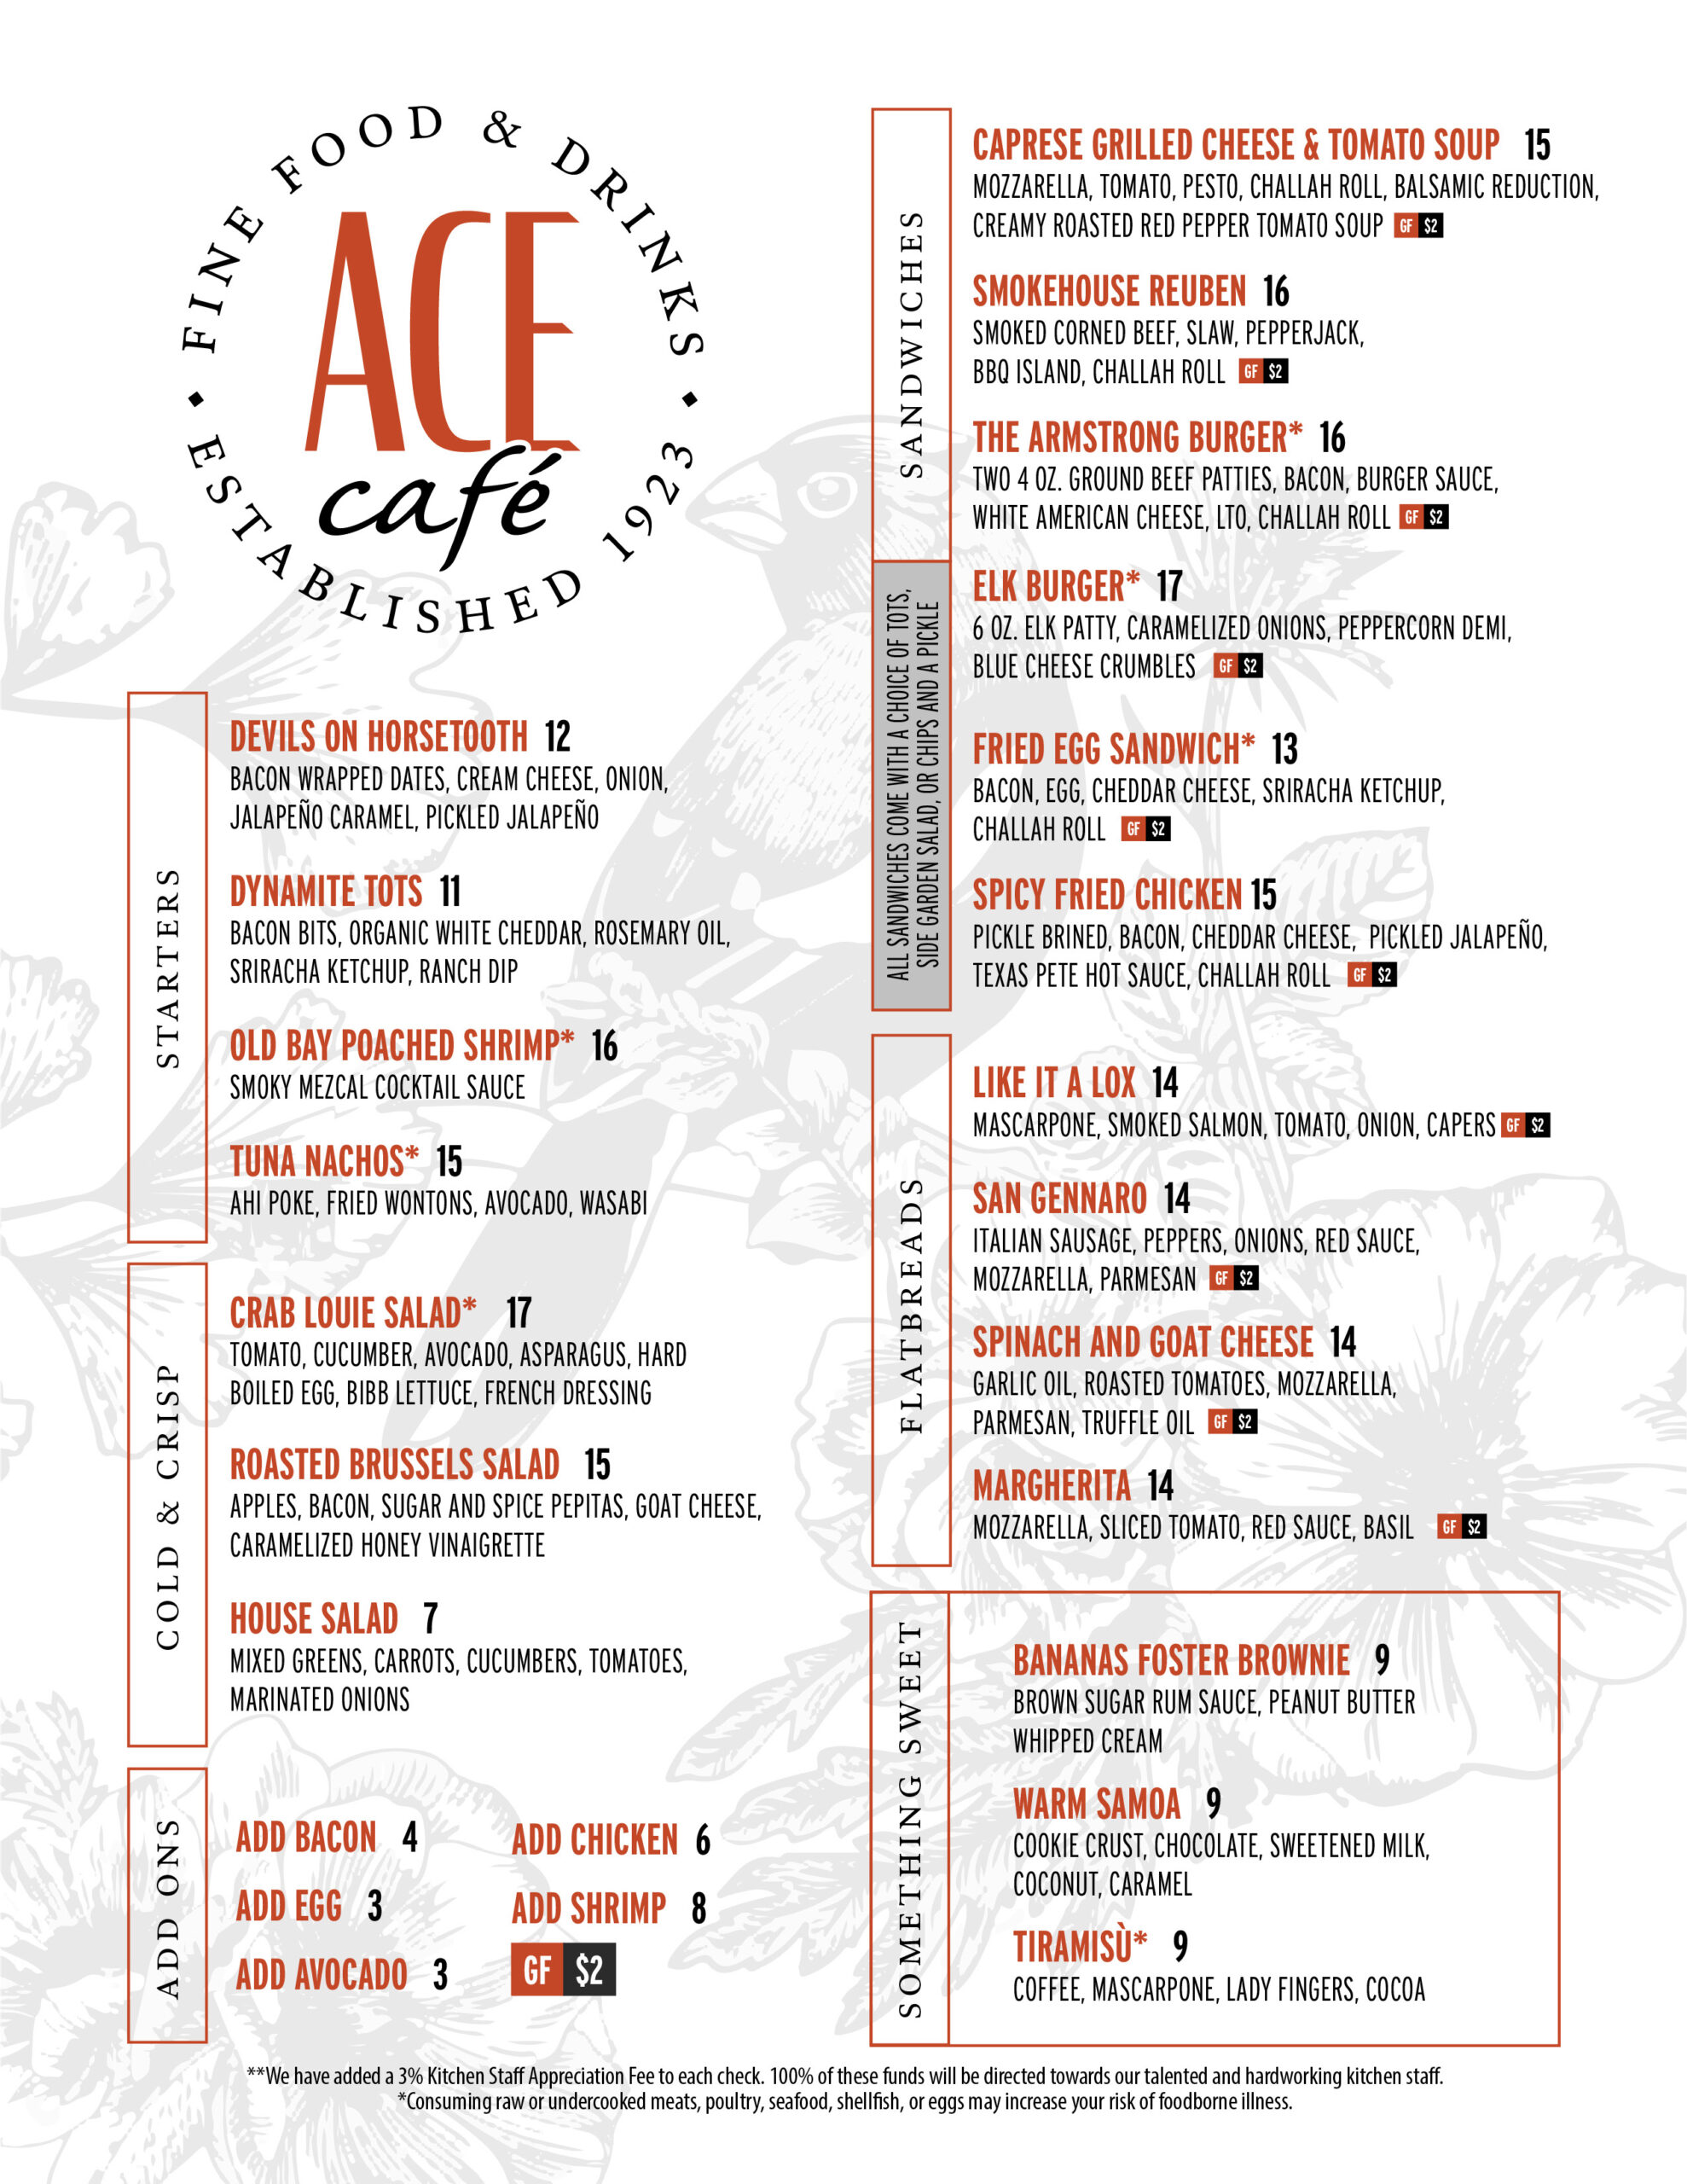 Ace Café Menu